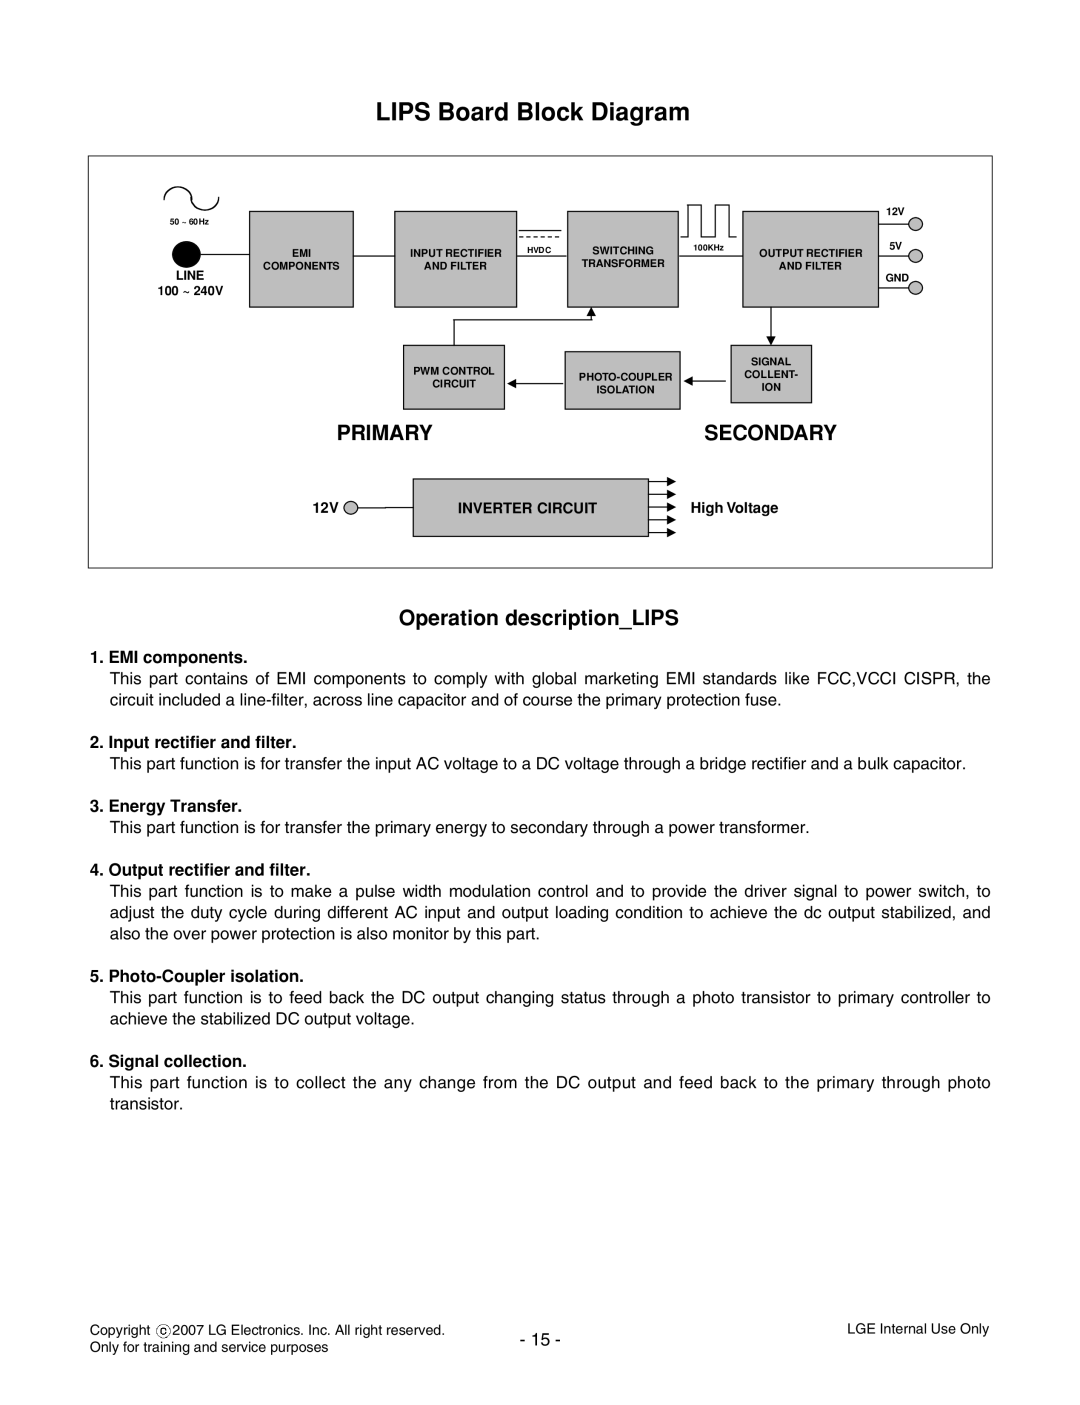 LG Electronics L1733TR LIPS Board Block Diagram, Primary, Operation description LIPS, EMI components, Energy Transfer 